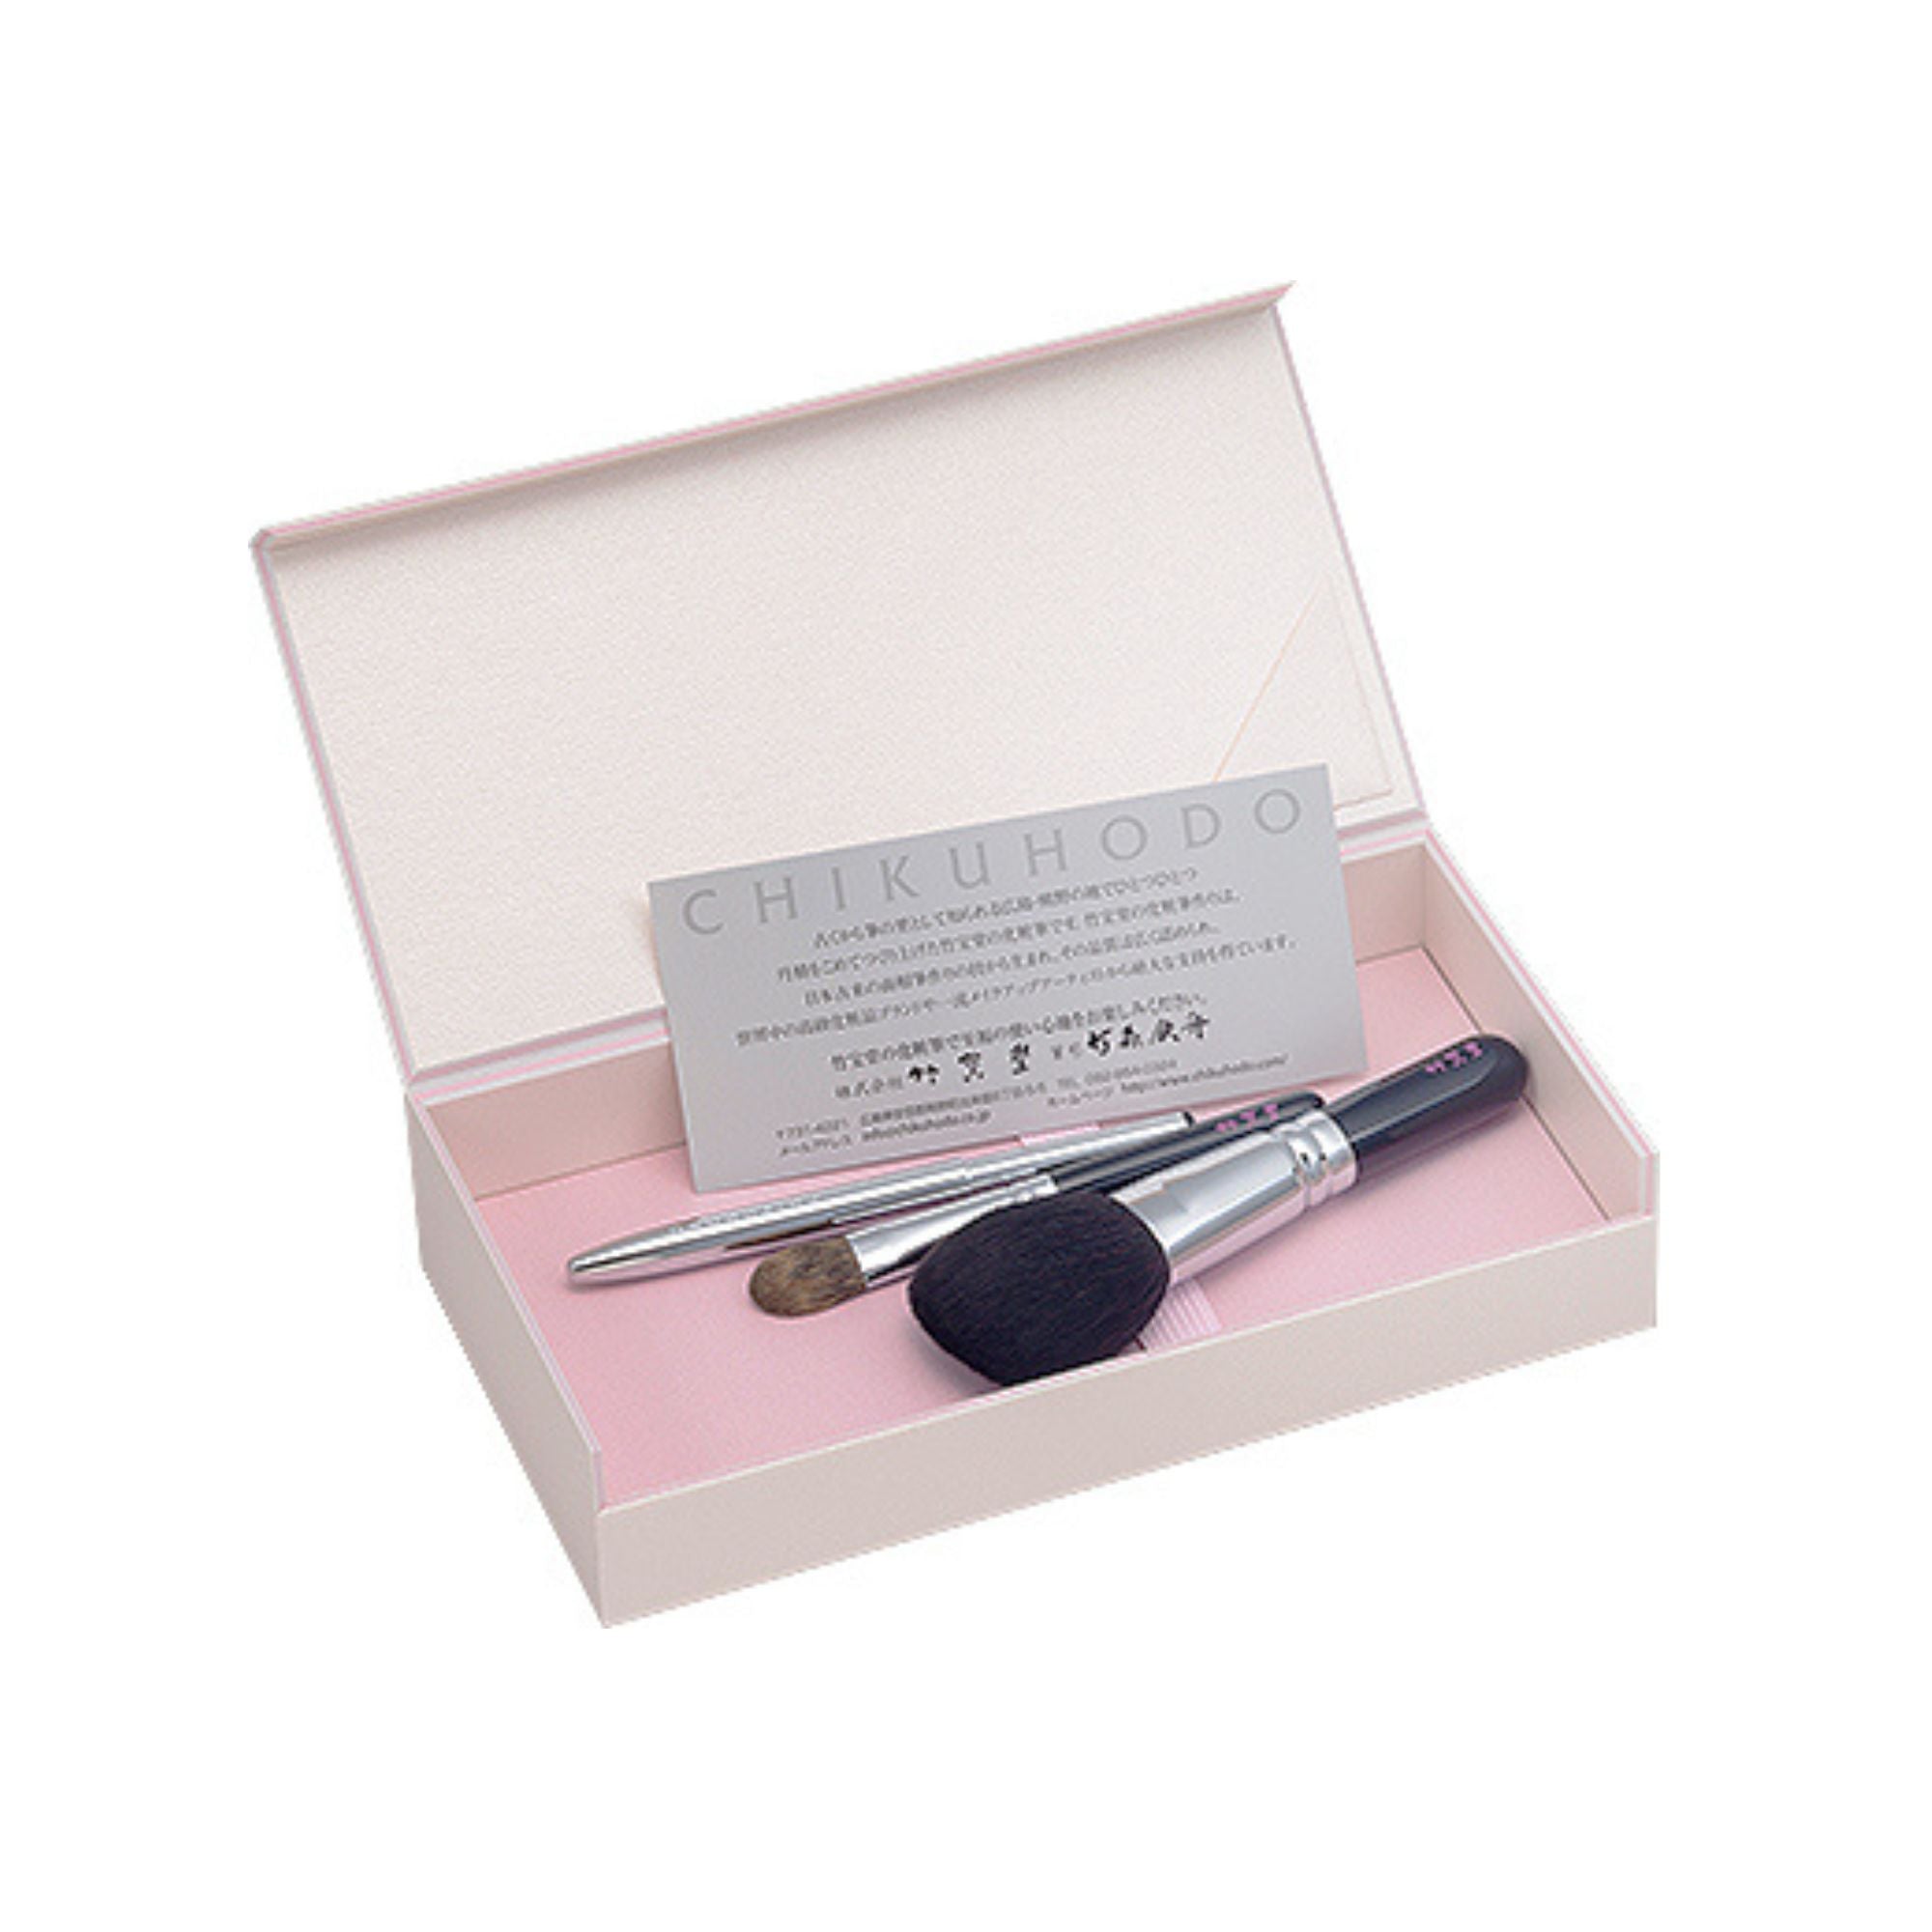 Chikuhodo 3-Brush Gift Set BR-5 - Fude Beauty, Japanese Makeup Brushes